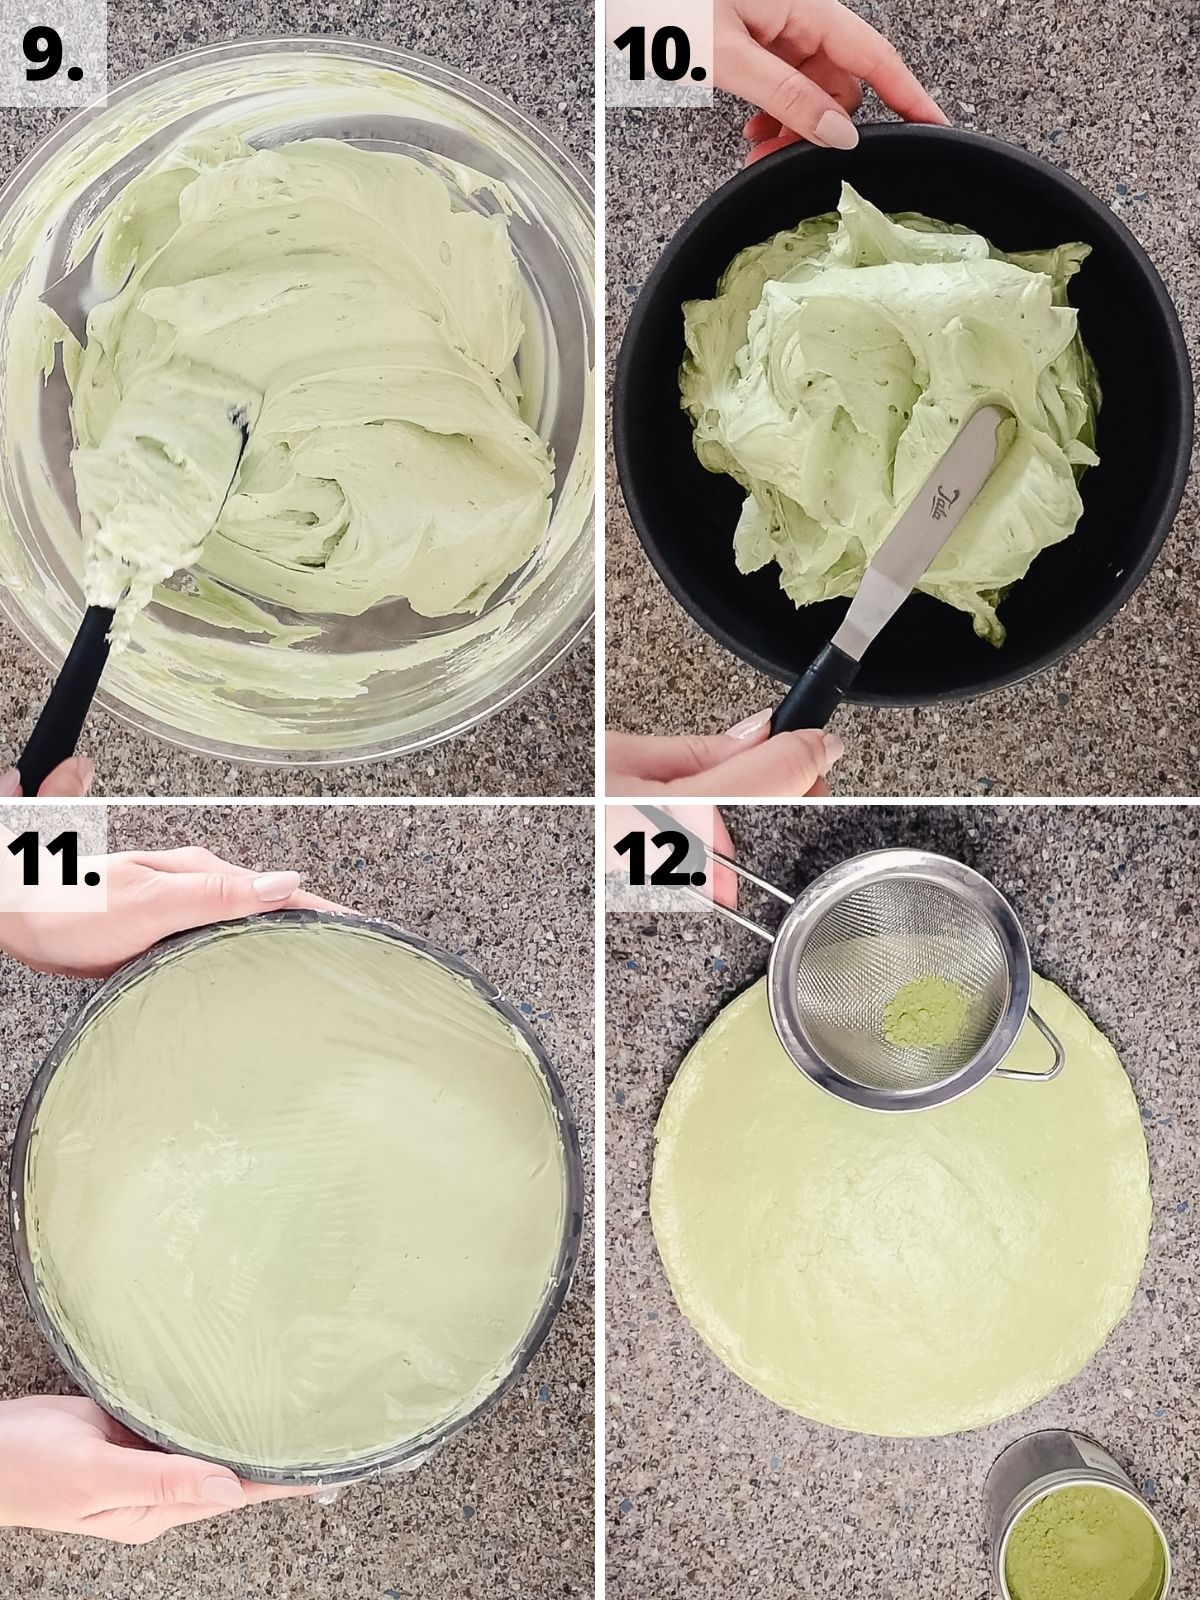 matcha cheesecake method steps 9 - 12